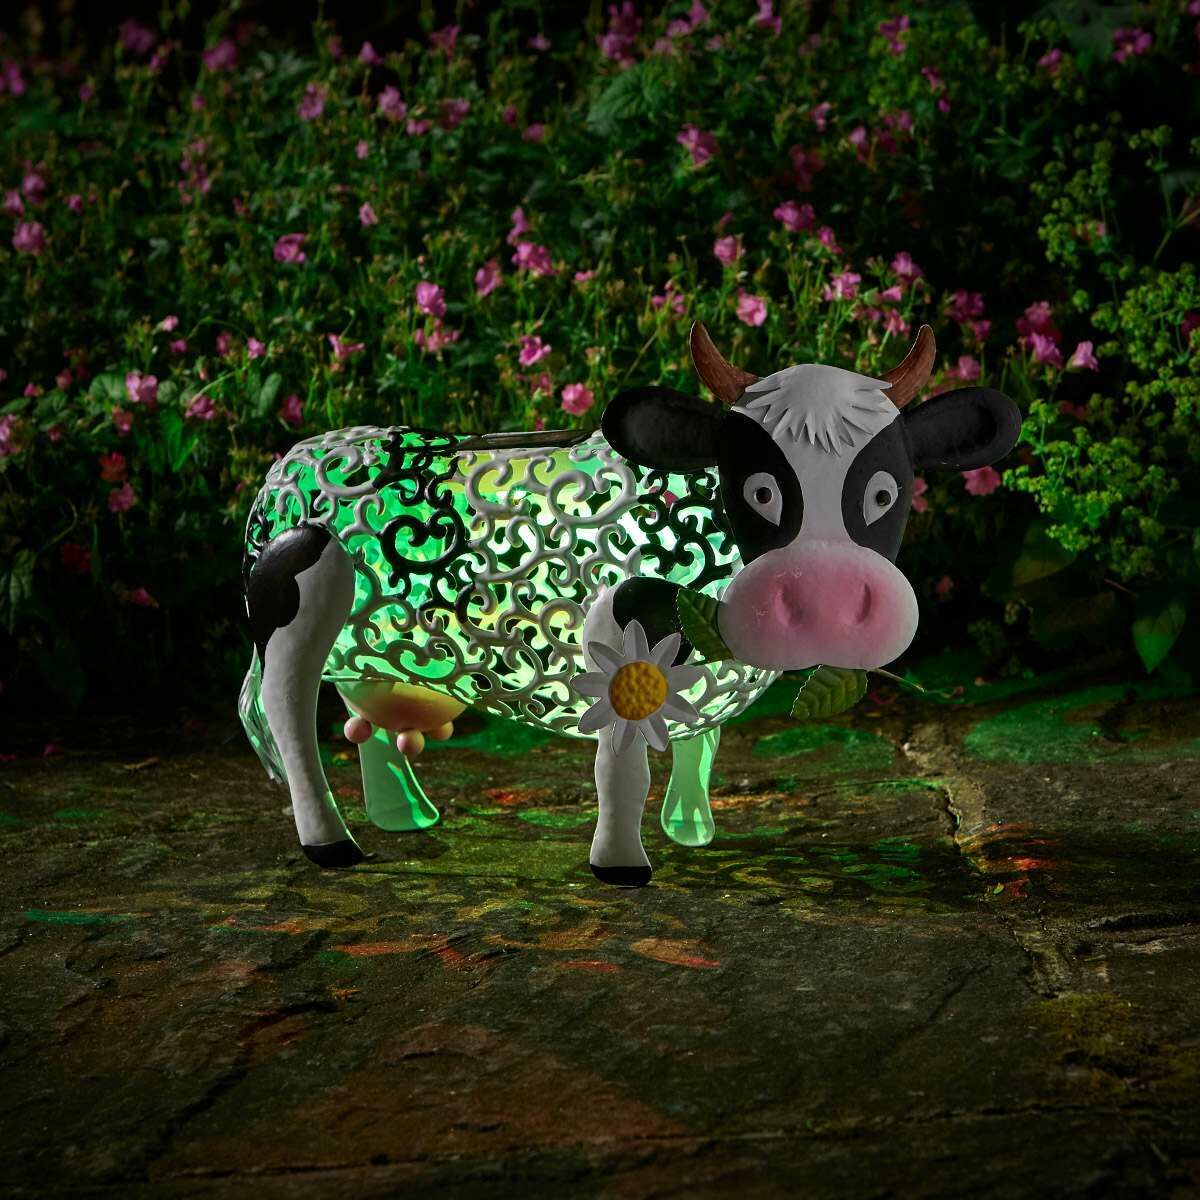 Solar Novelty Daisy the Cow Light image 2